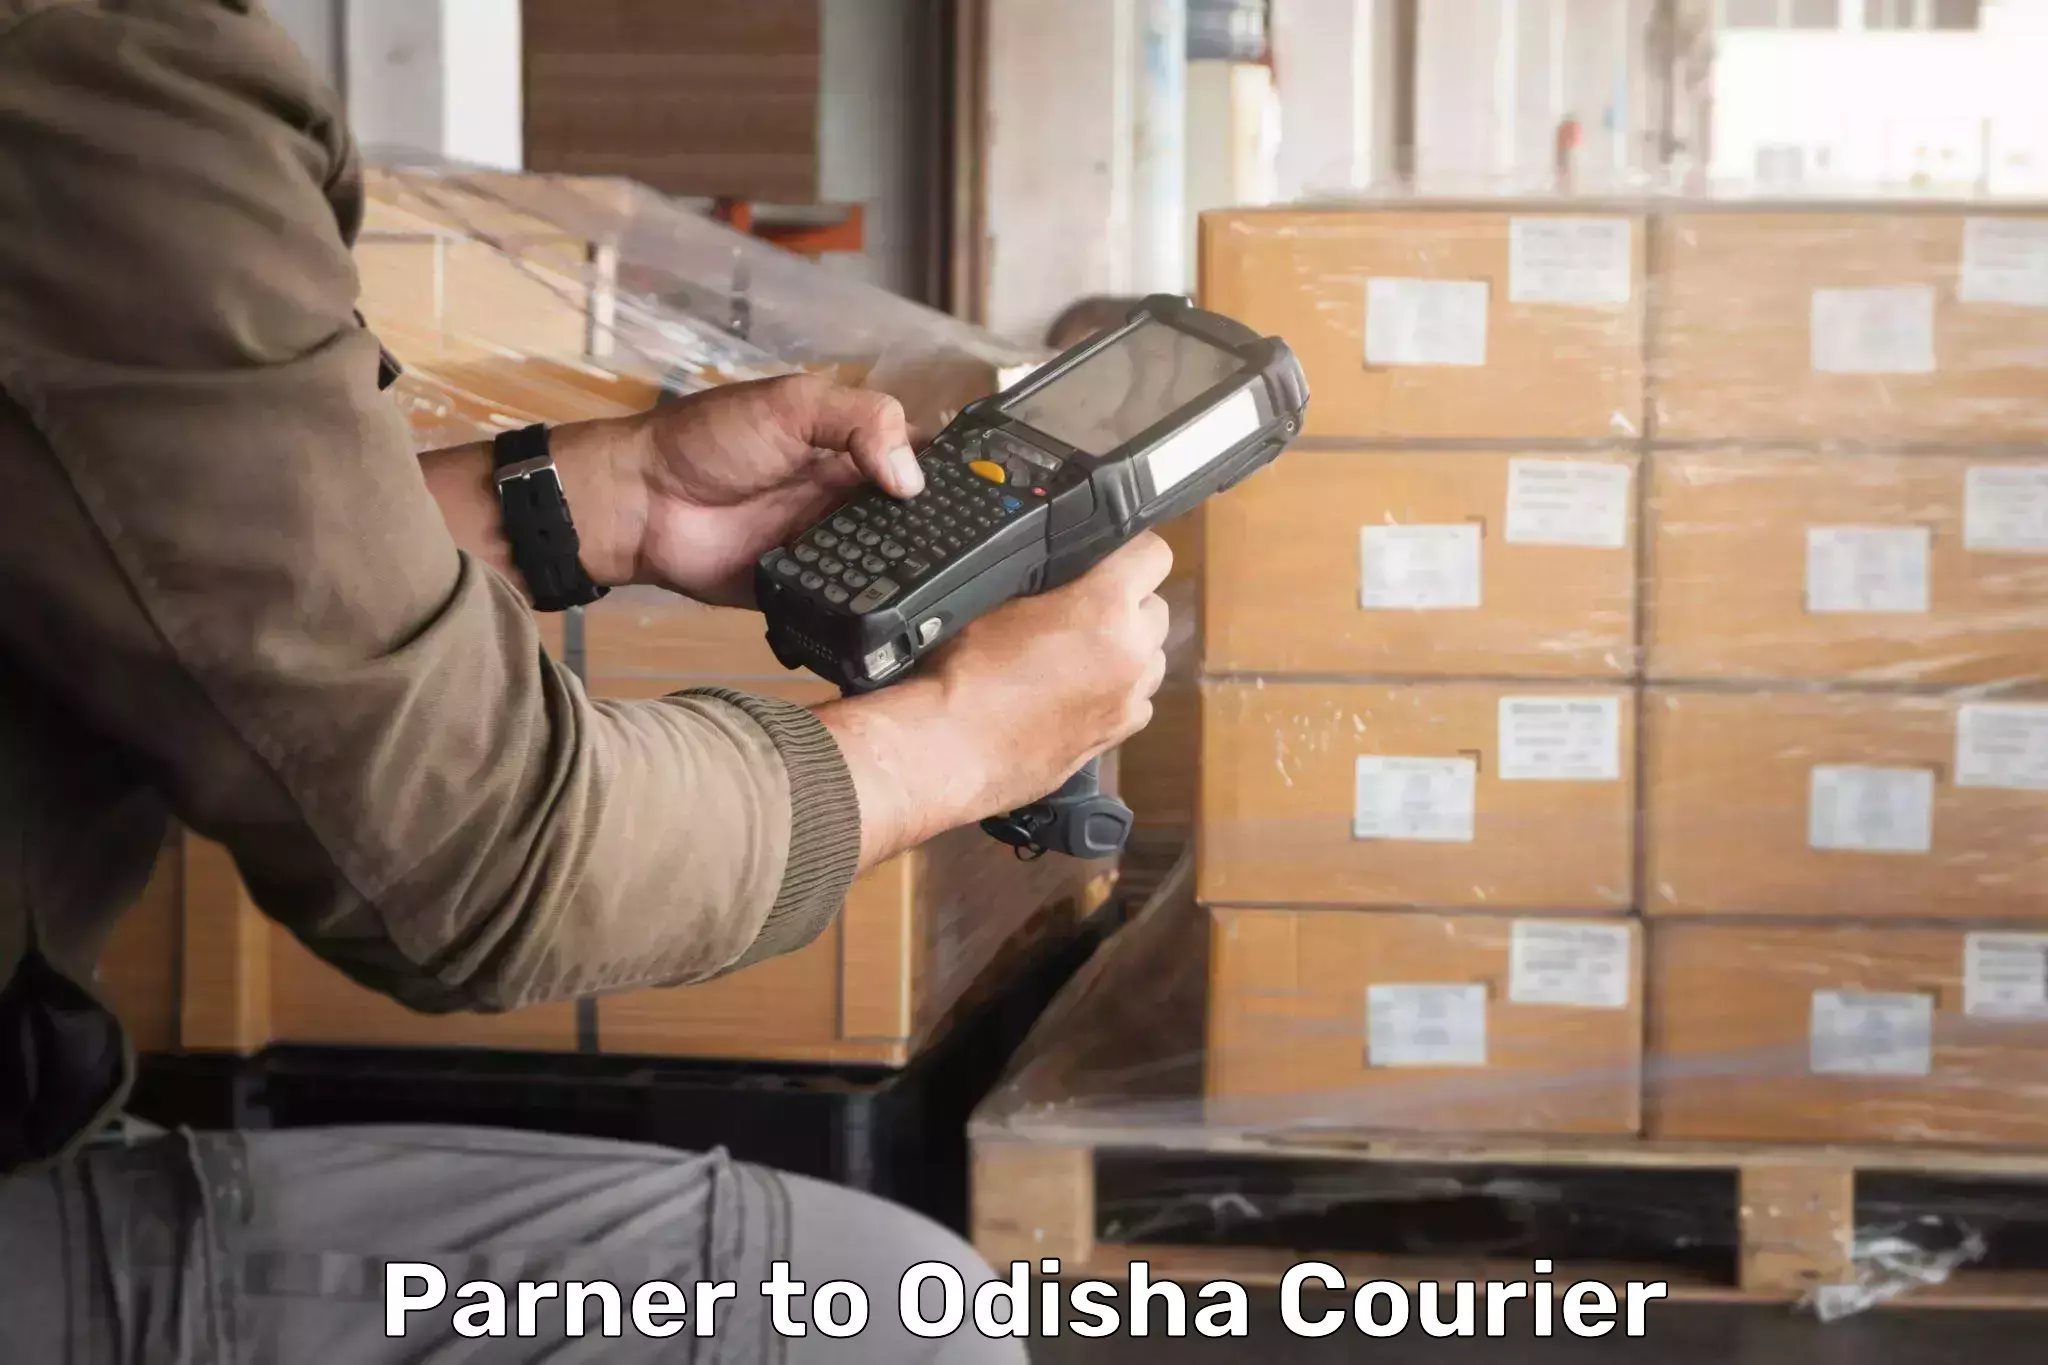 Flexible delivery schedules Parner to Raruan